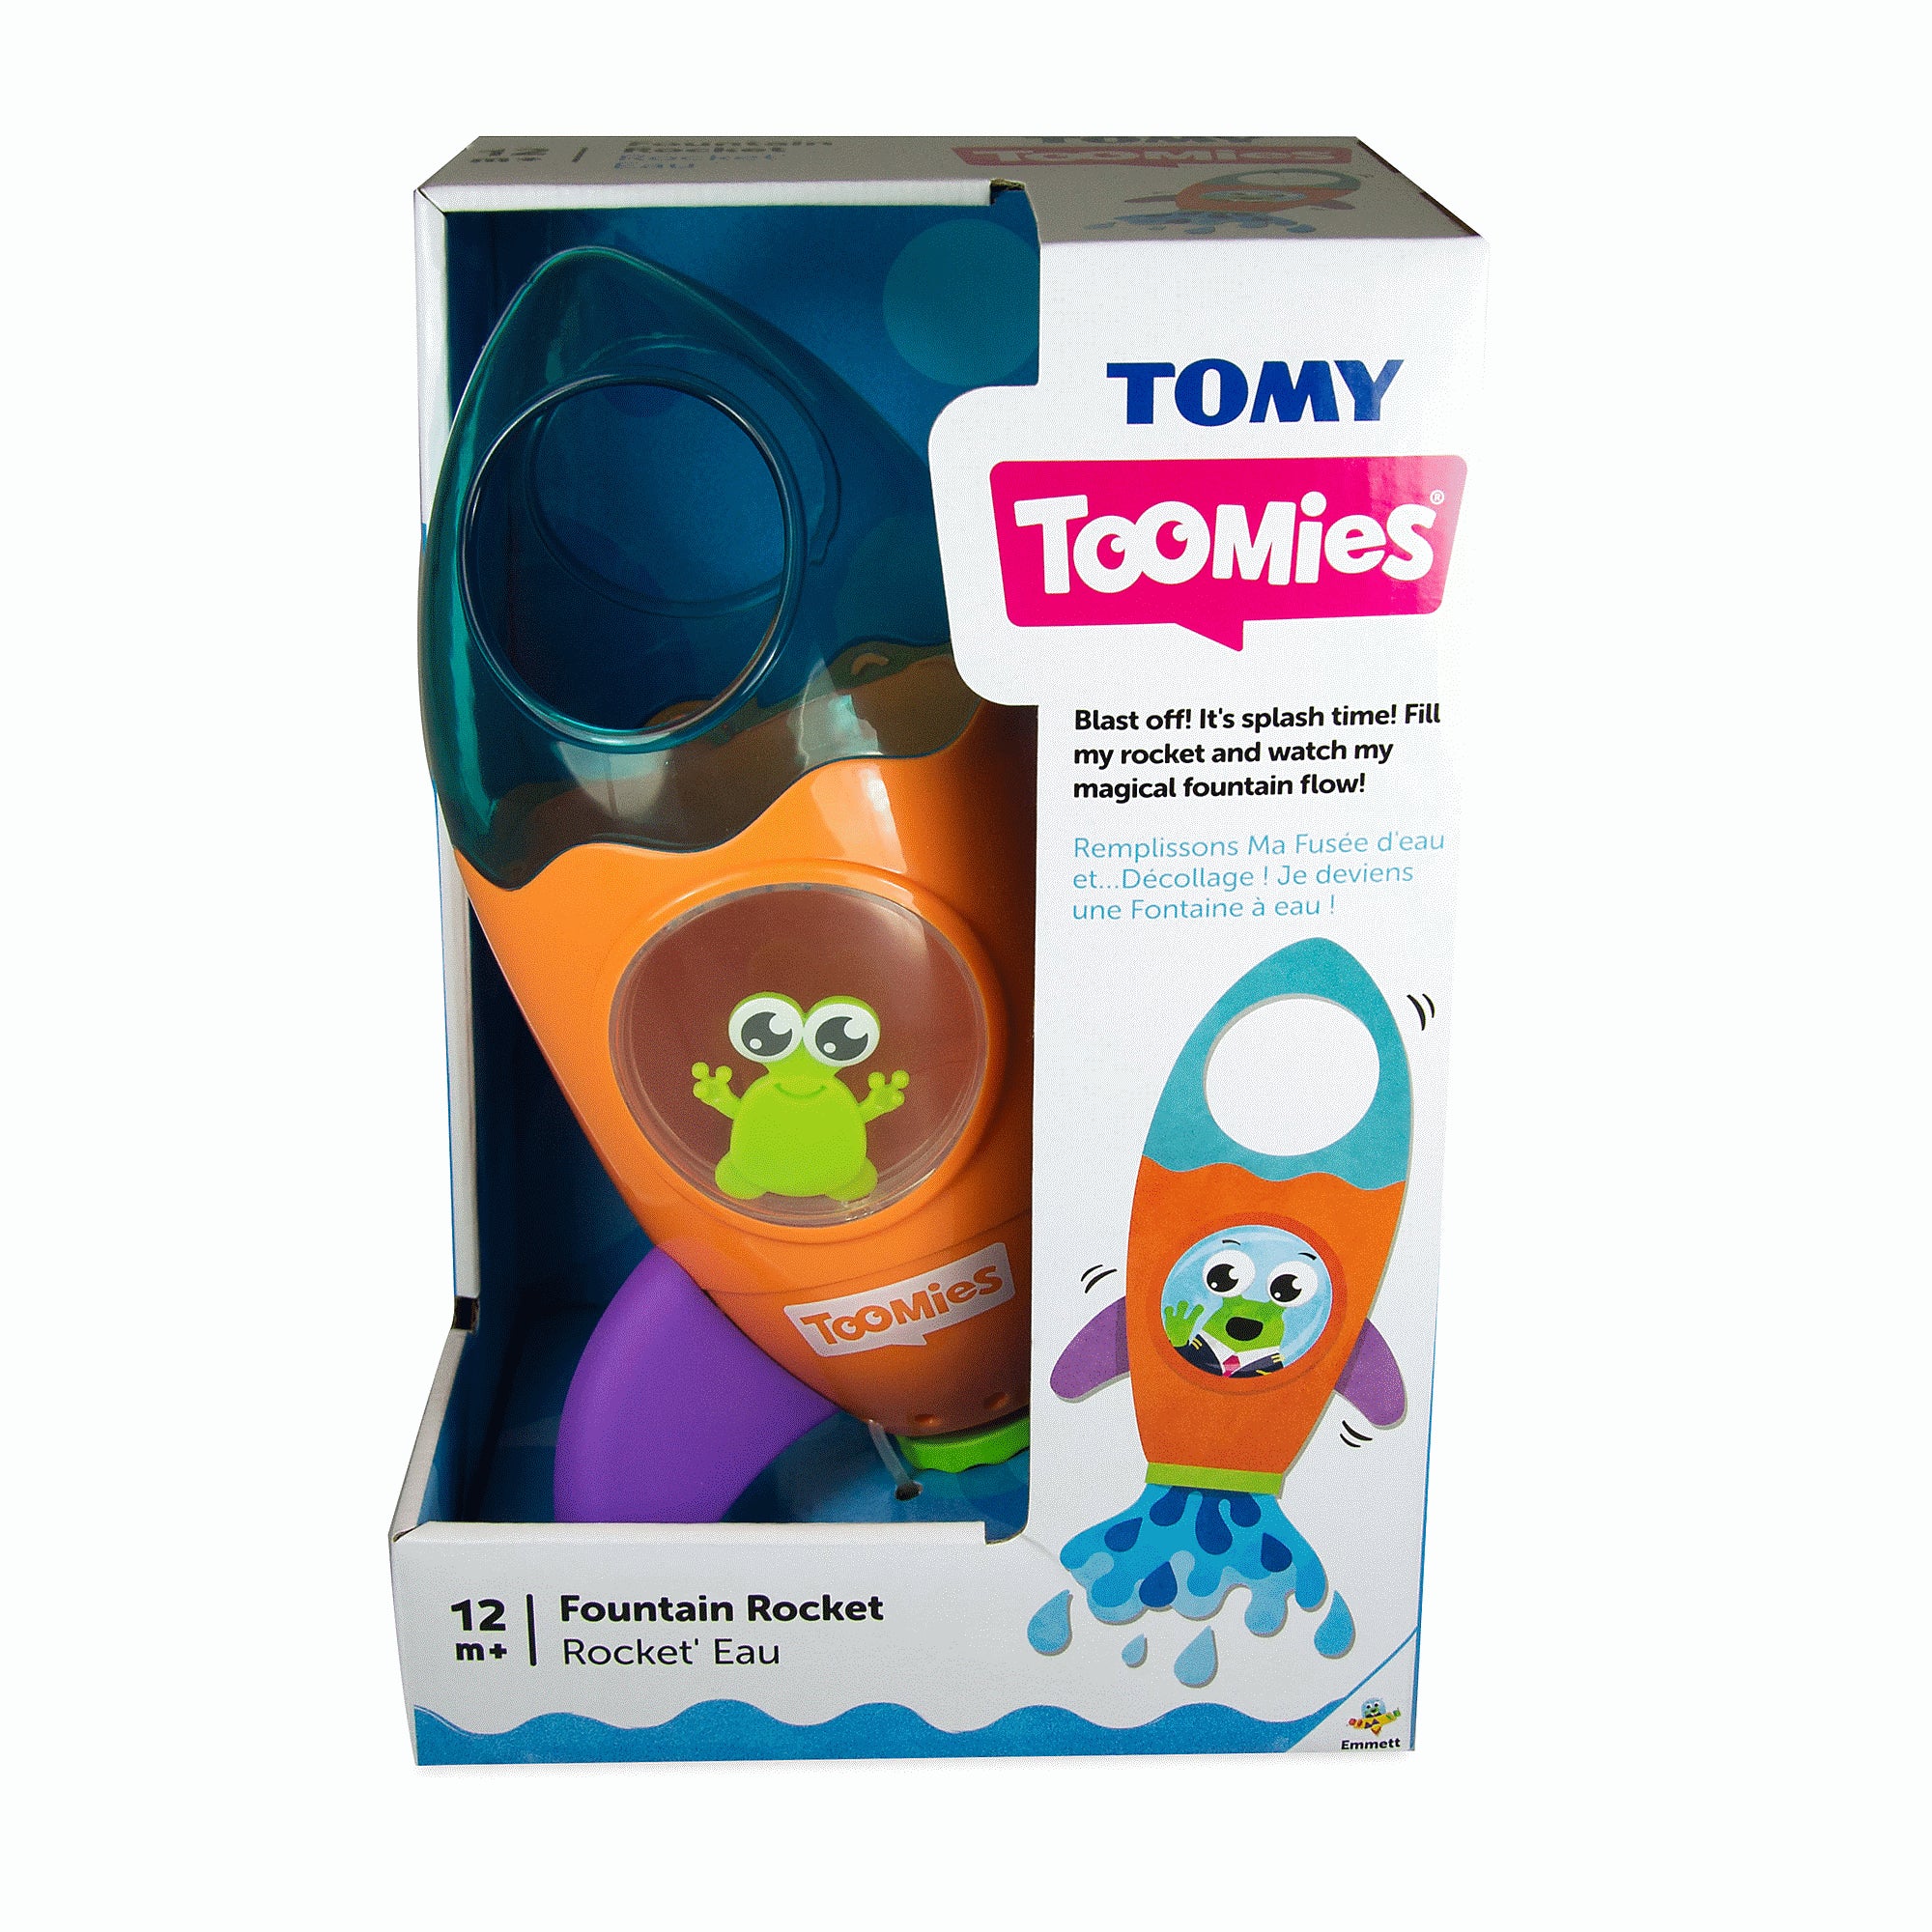 Tomy Toomies Fountain Rocket